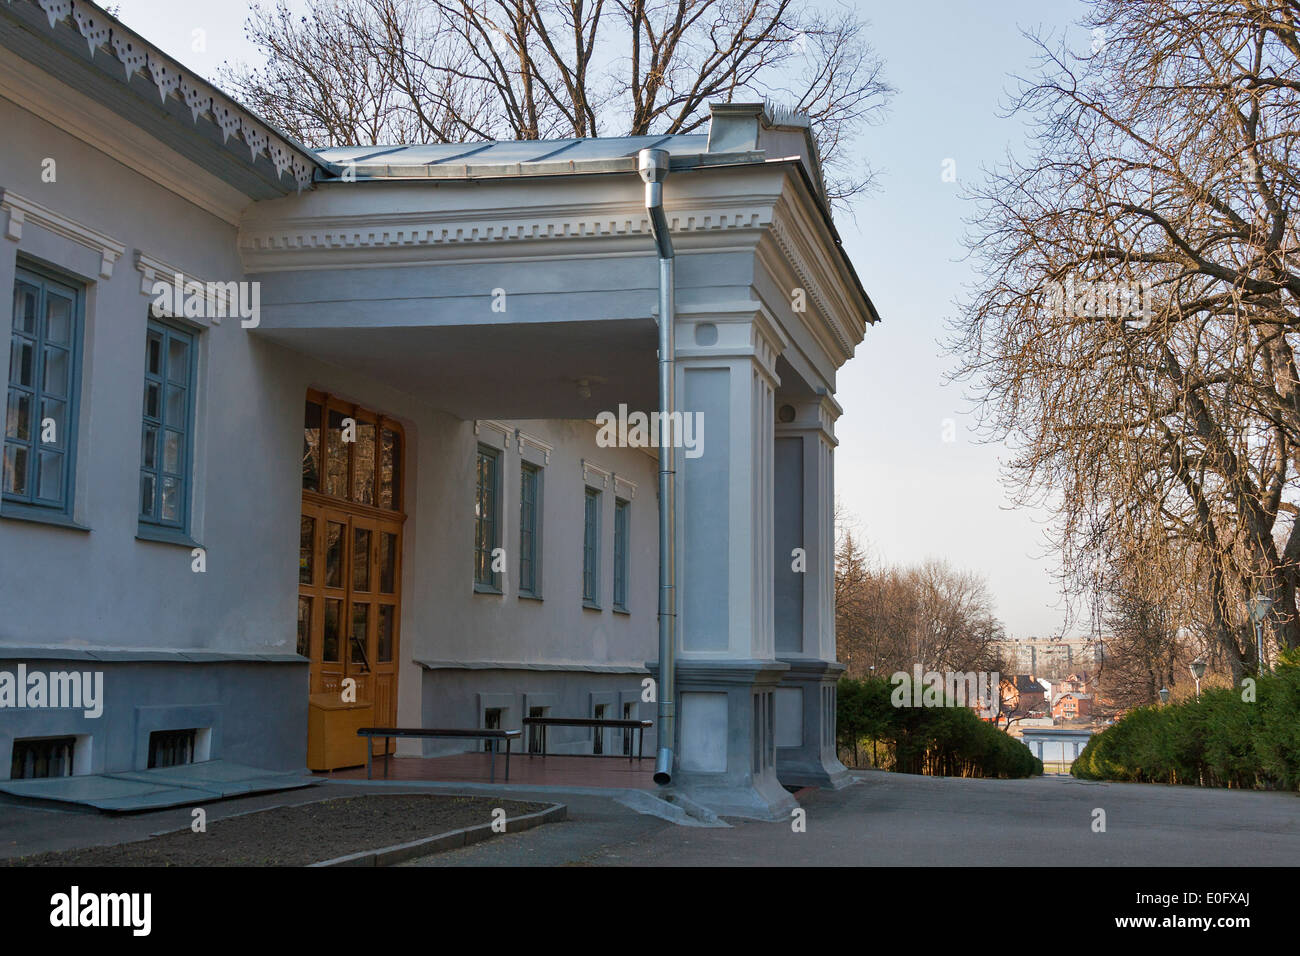 Family House Estate of Nikolay Pirogov, a prominent Russian and Ukrainian surgeon. It was built in Vinnitsa, Ukraine. Stock Photo